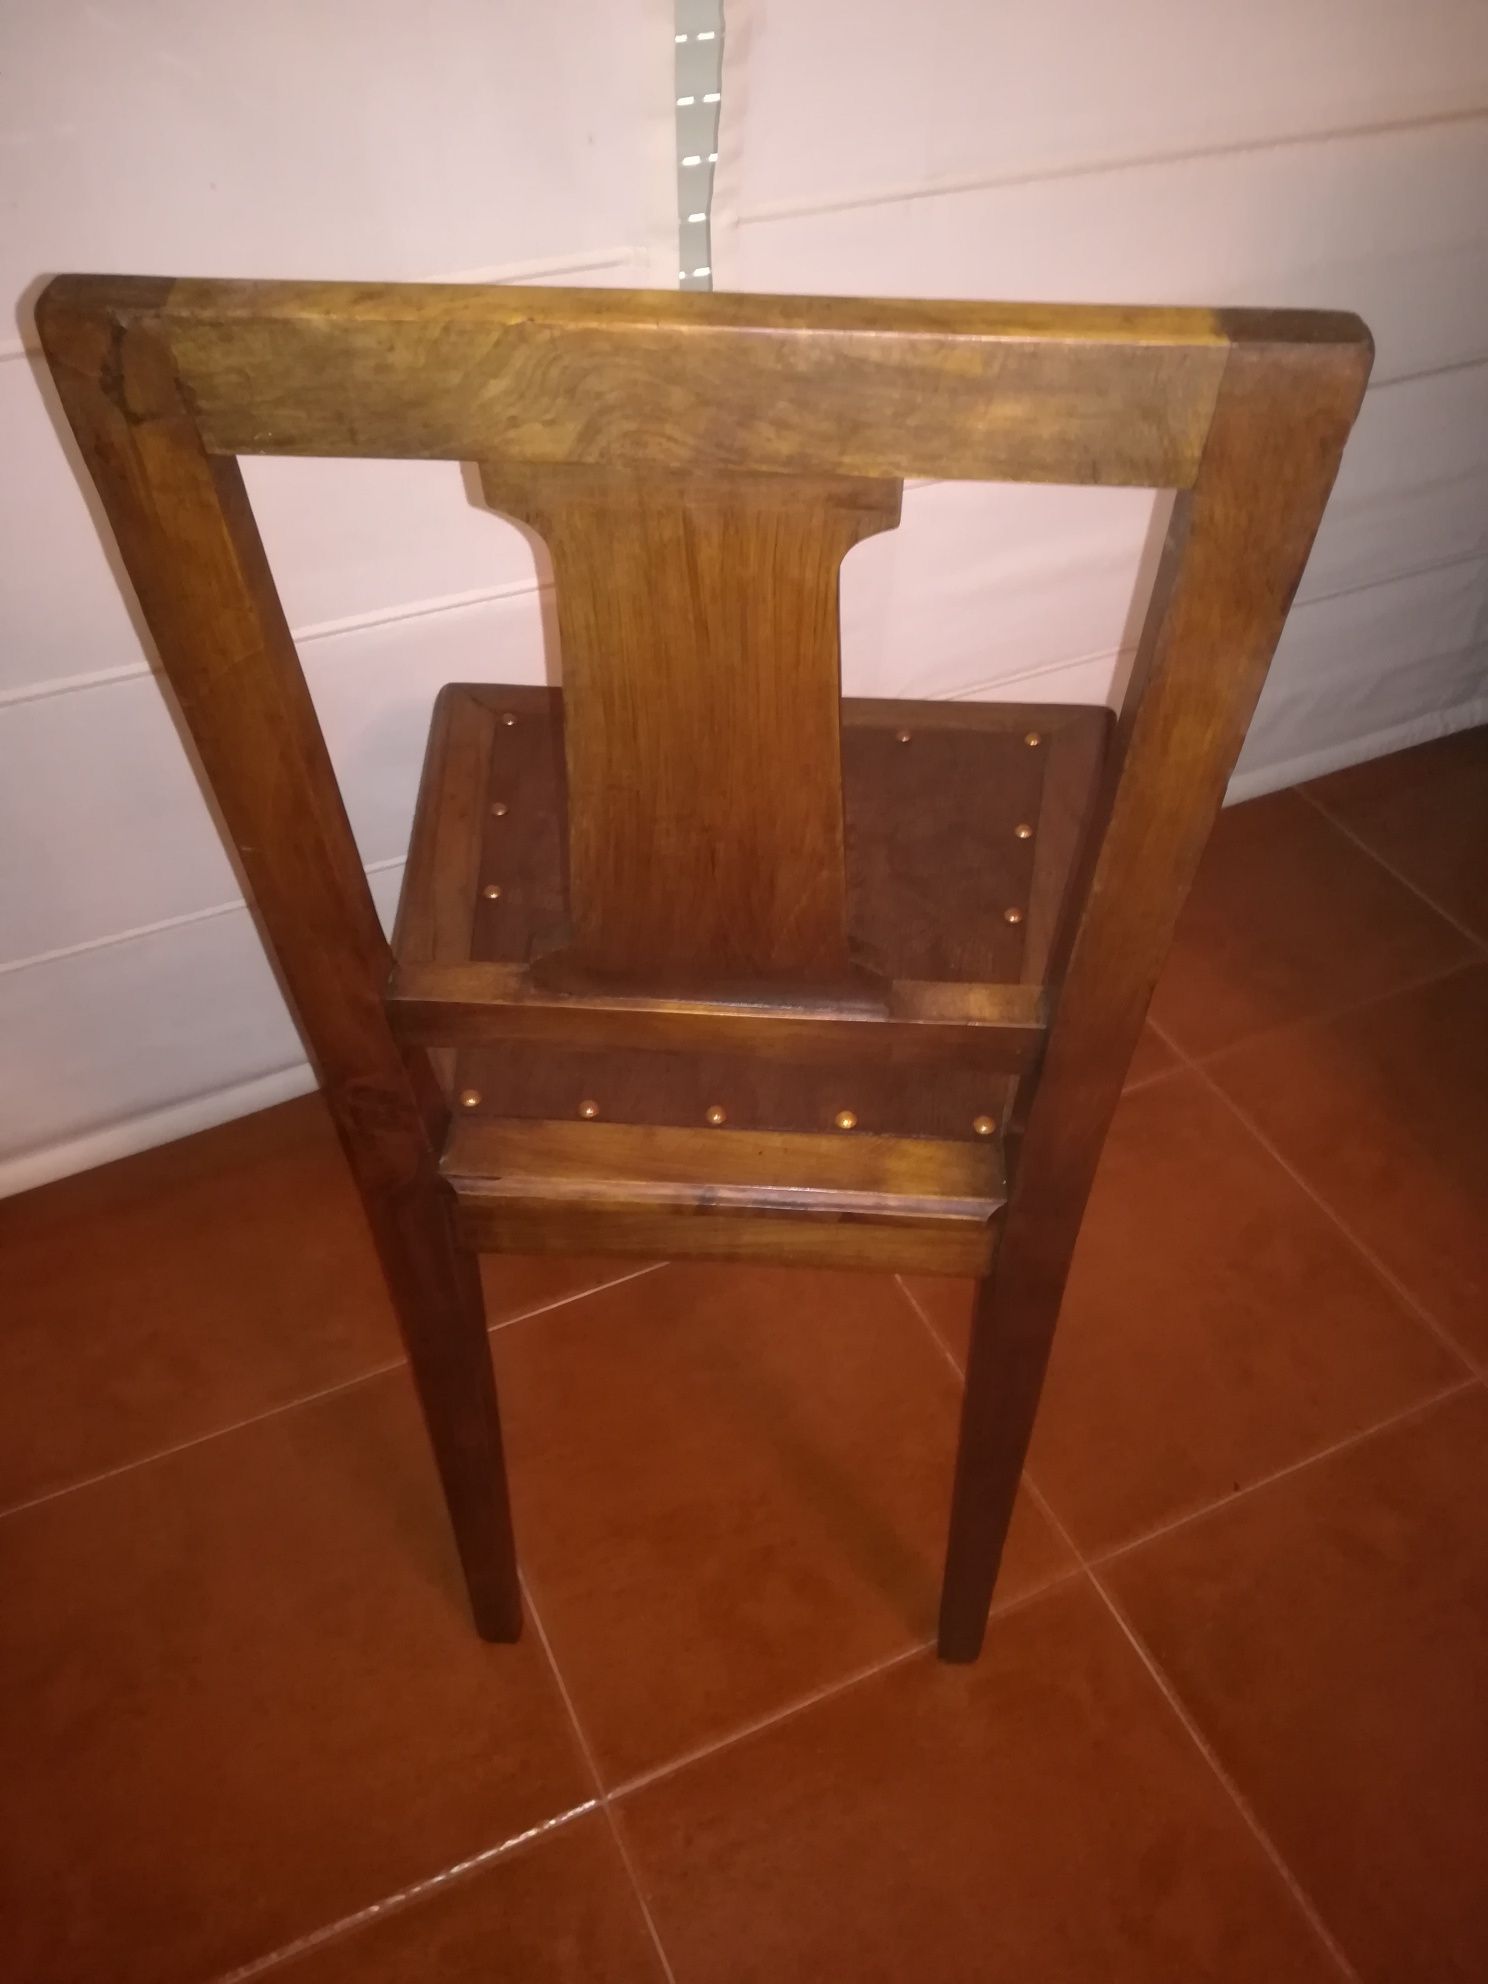 Antiga cadeira estilo vintage restaurada